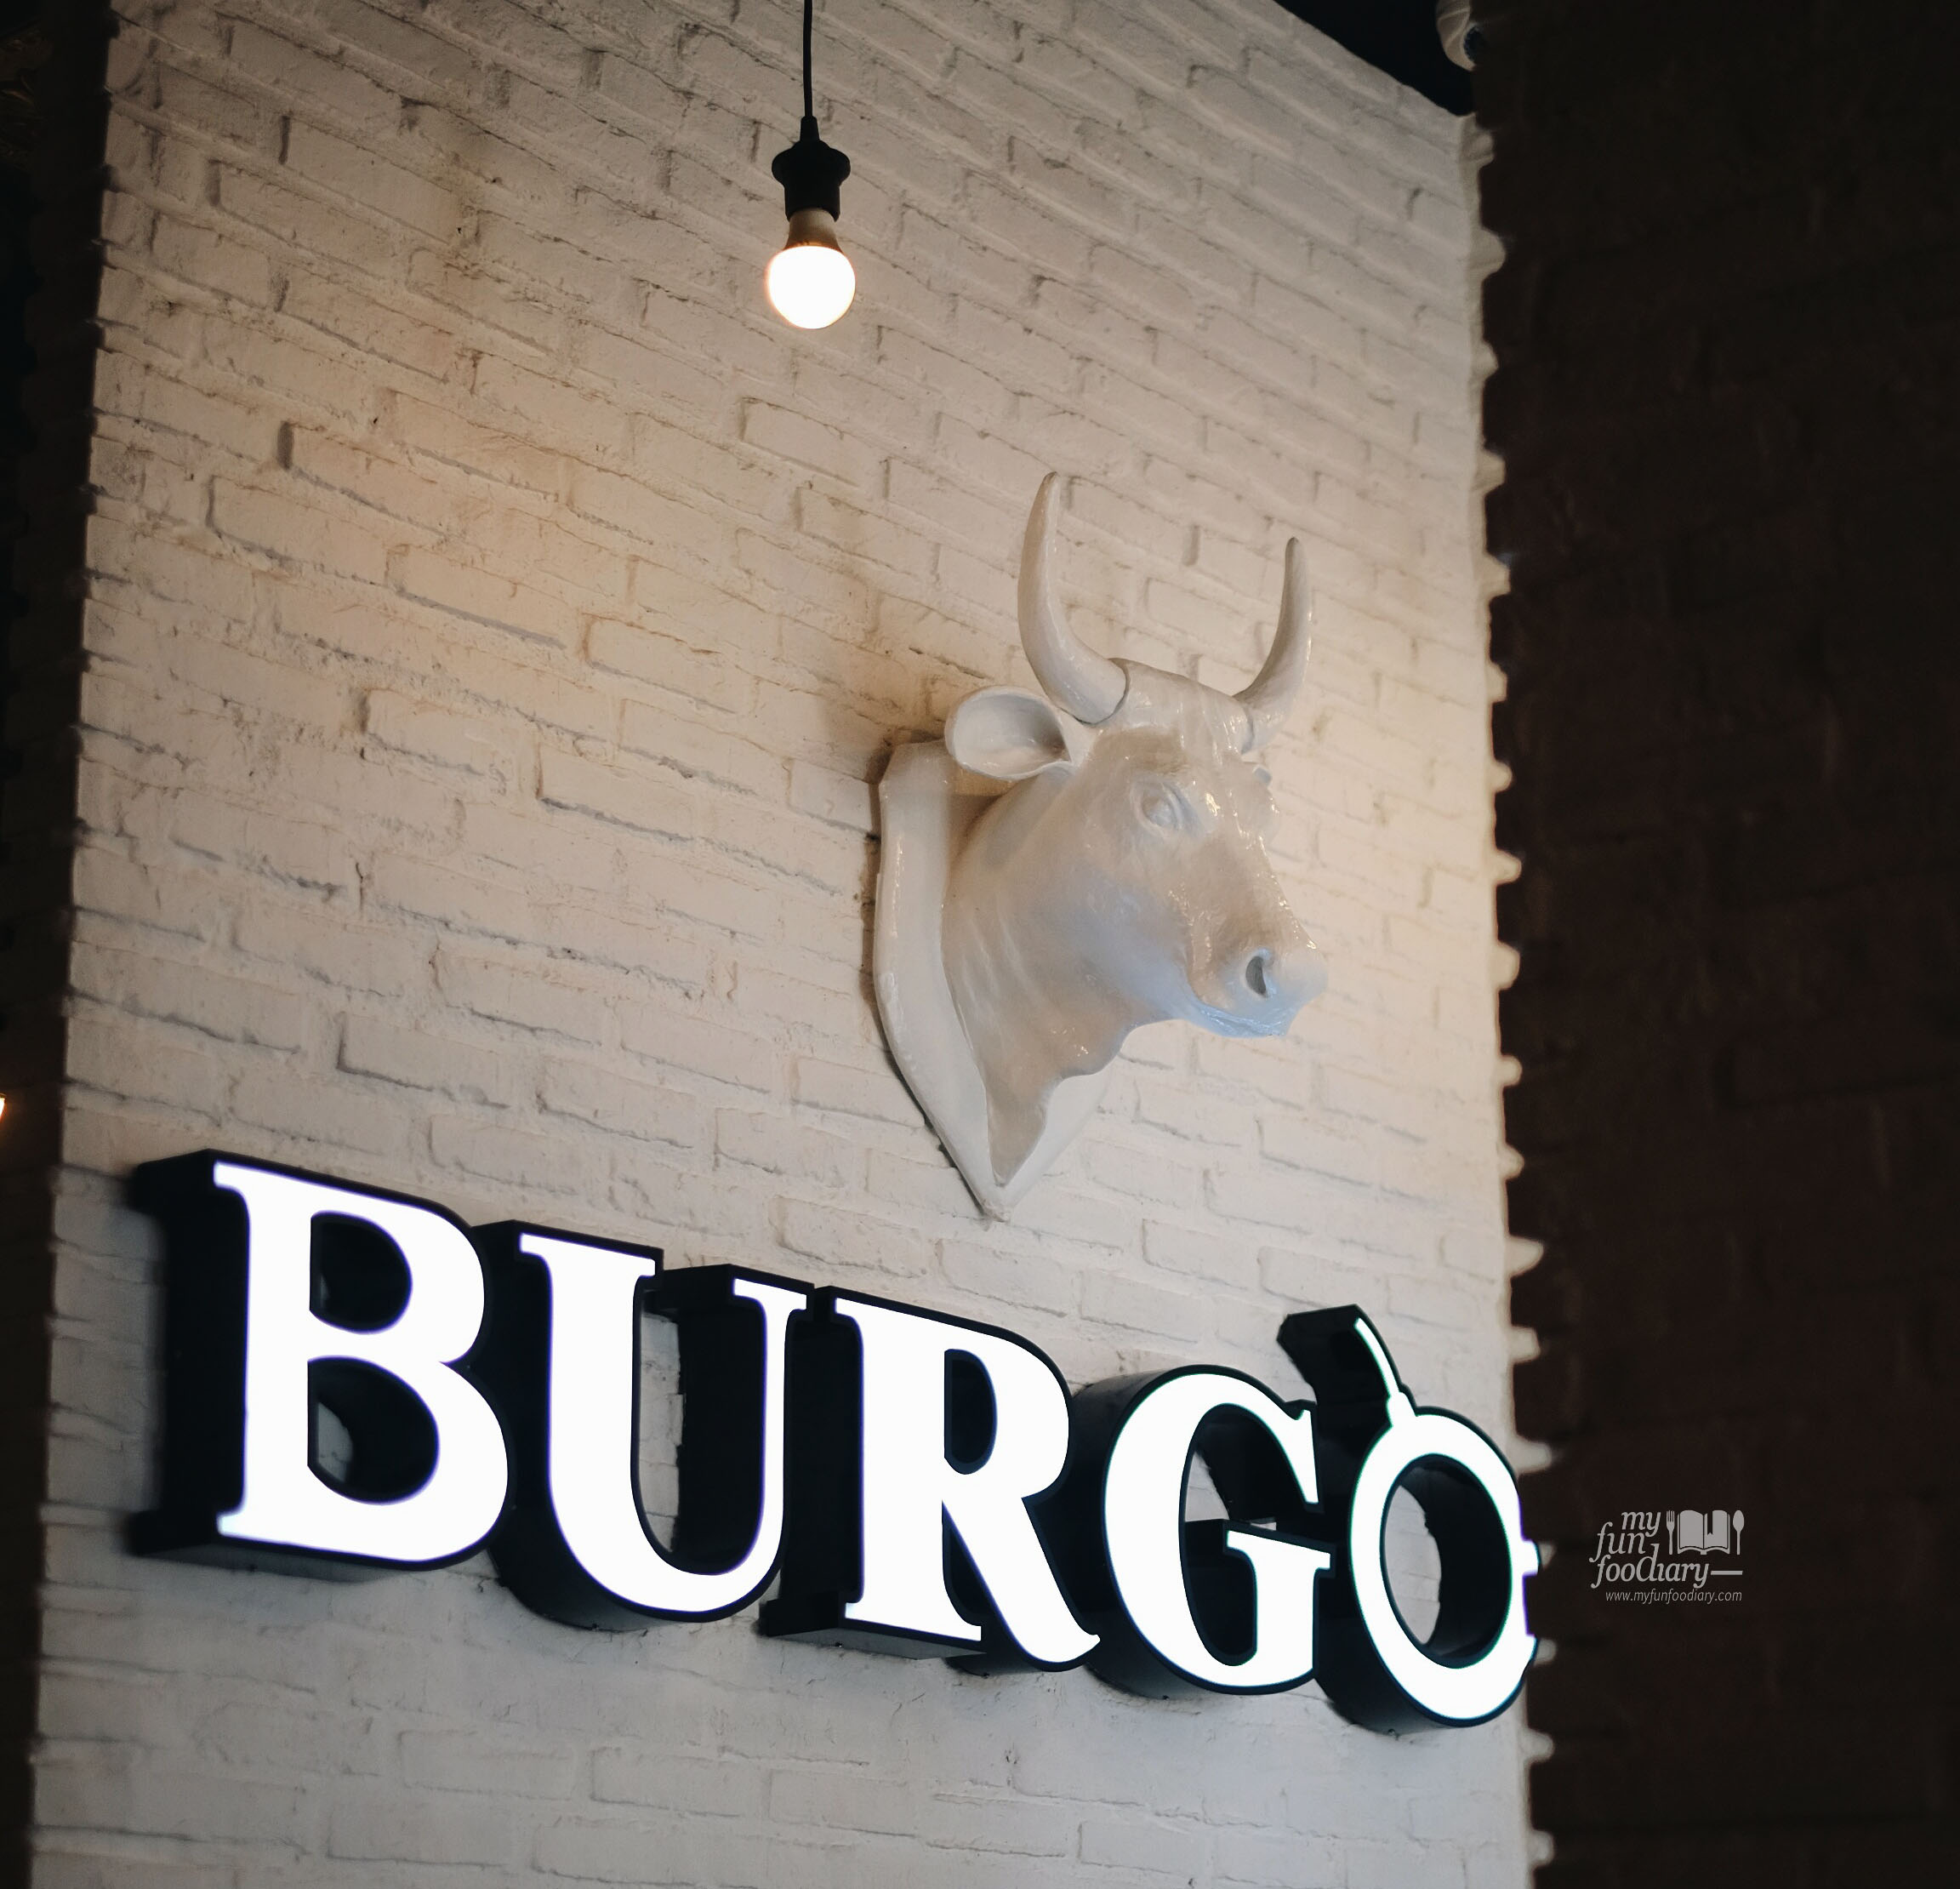 Cozy ambiance at Burgo Restaurant by Myfunfoodiary